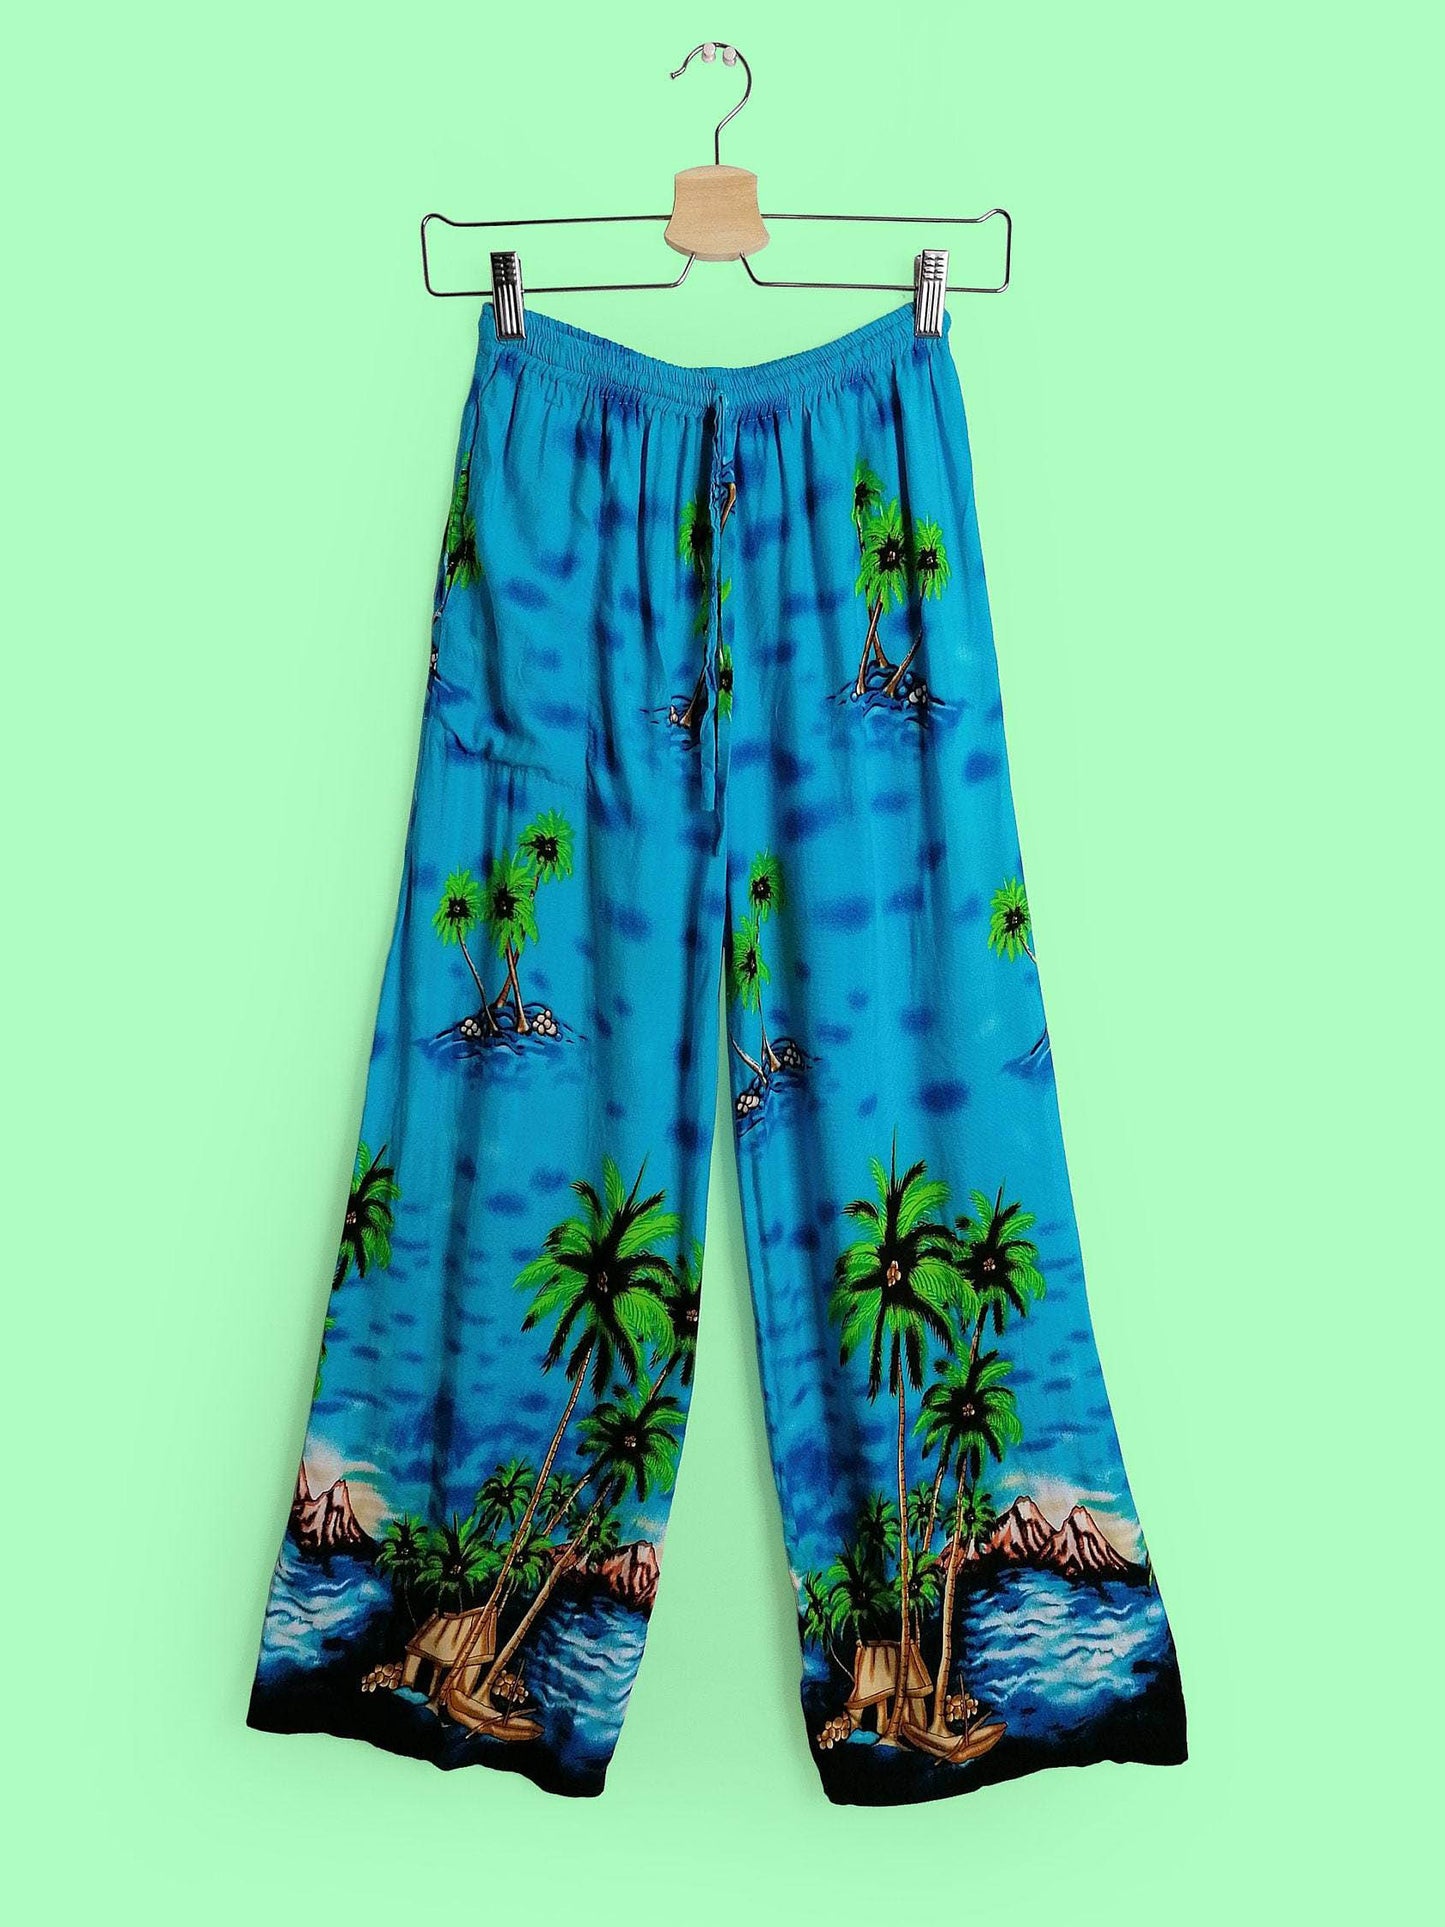 Palazzo Beach Pants Tropical Print - size XS-S